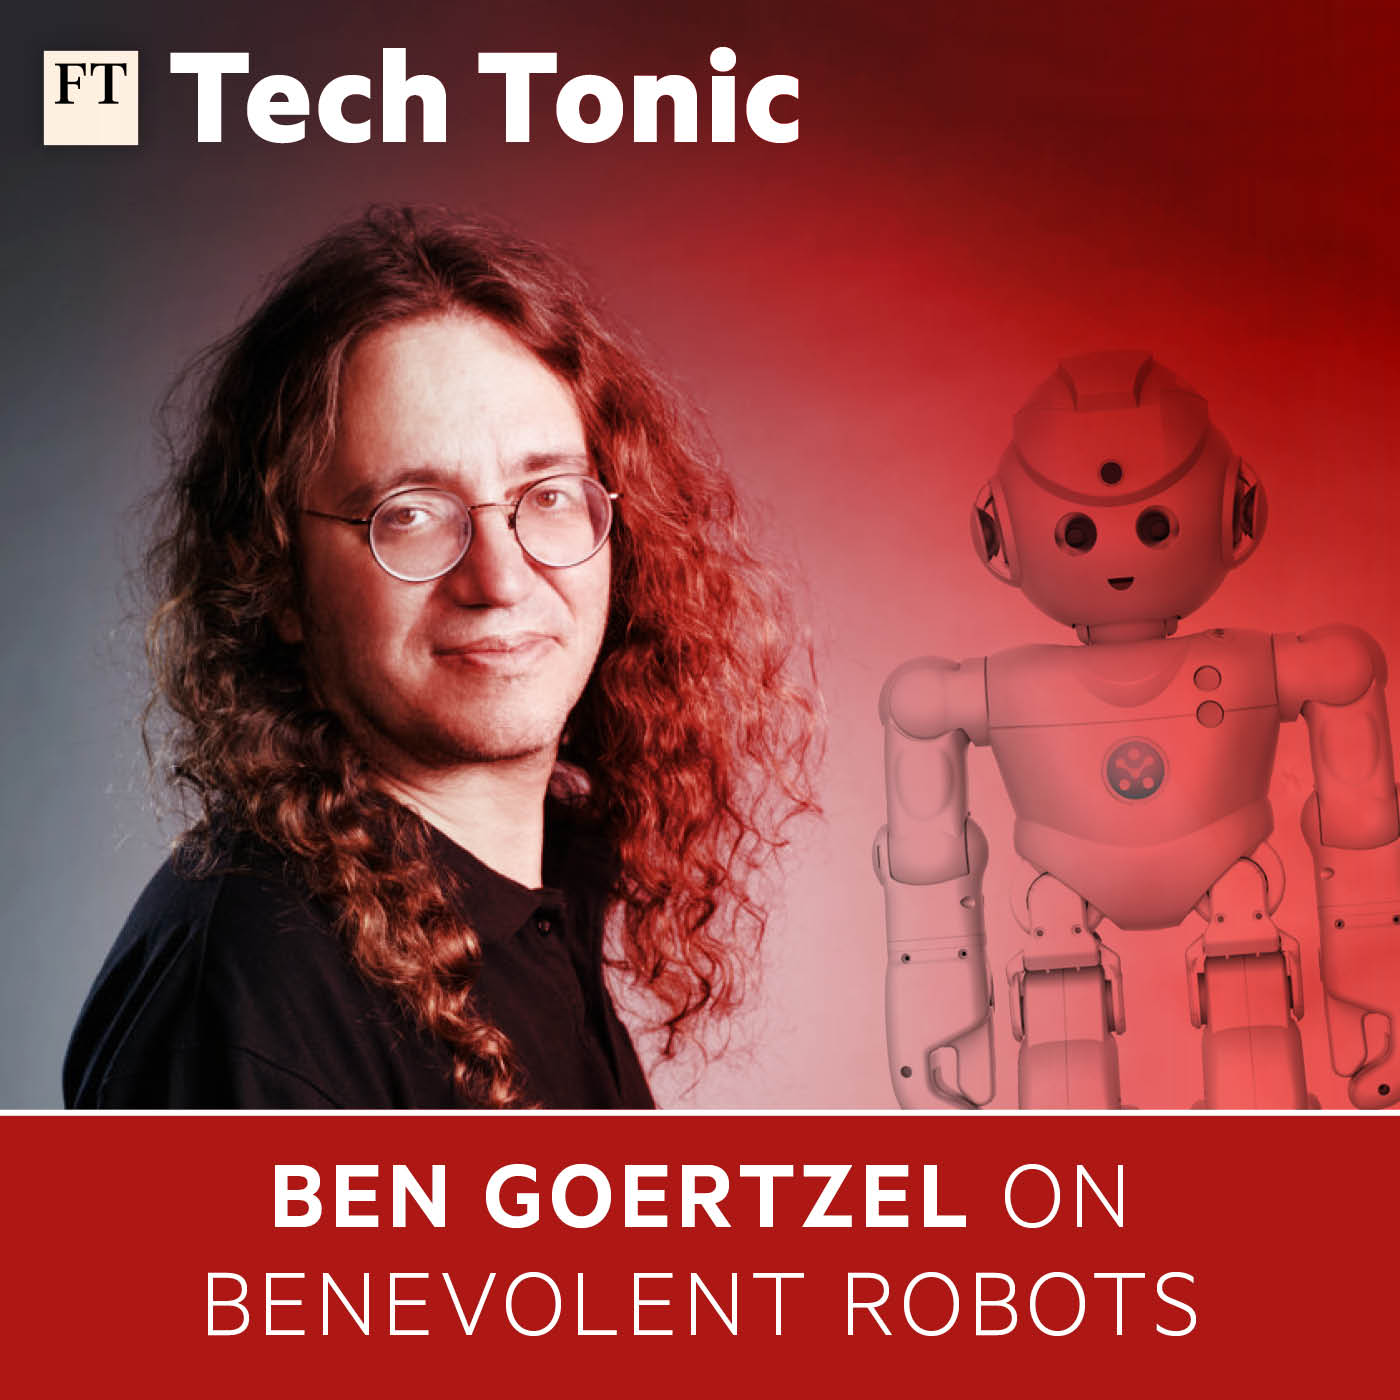 Ben Goertzel on benevolent robots